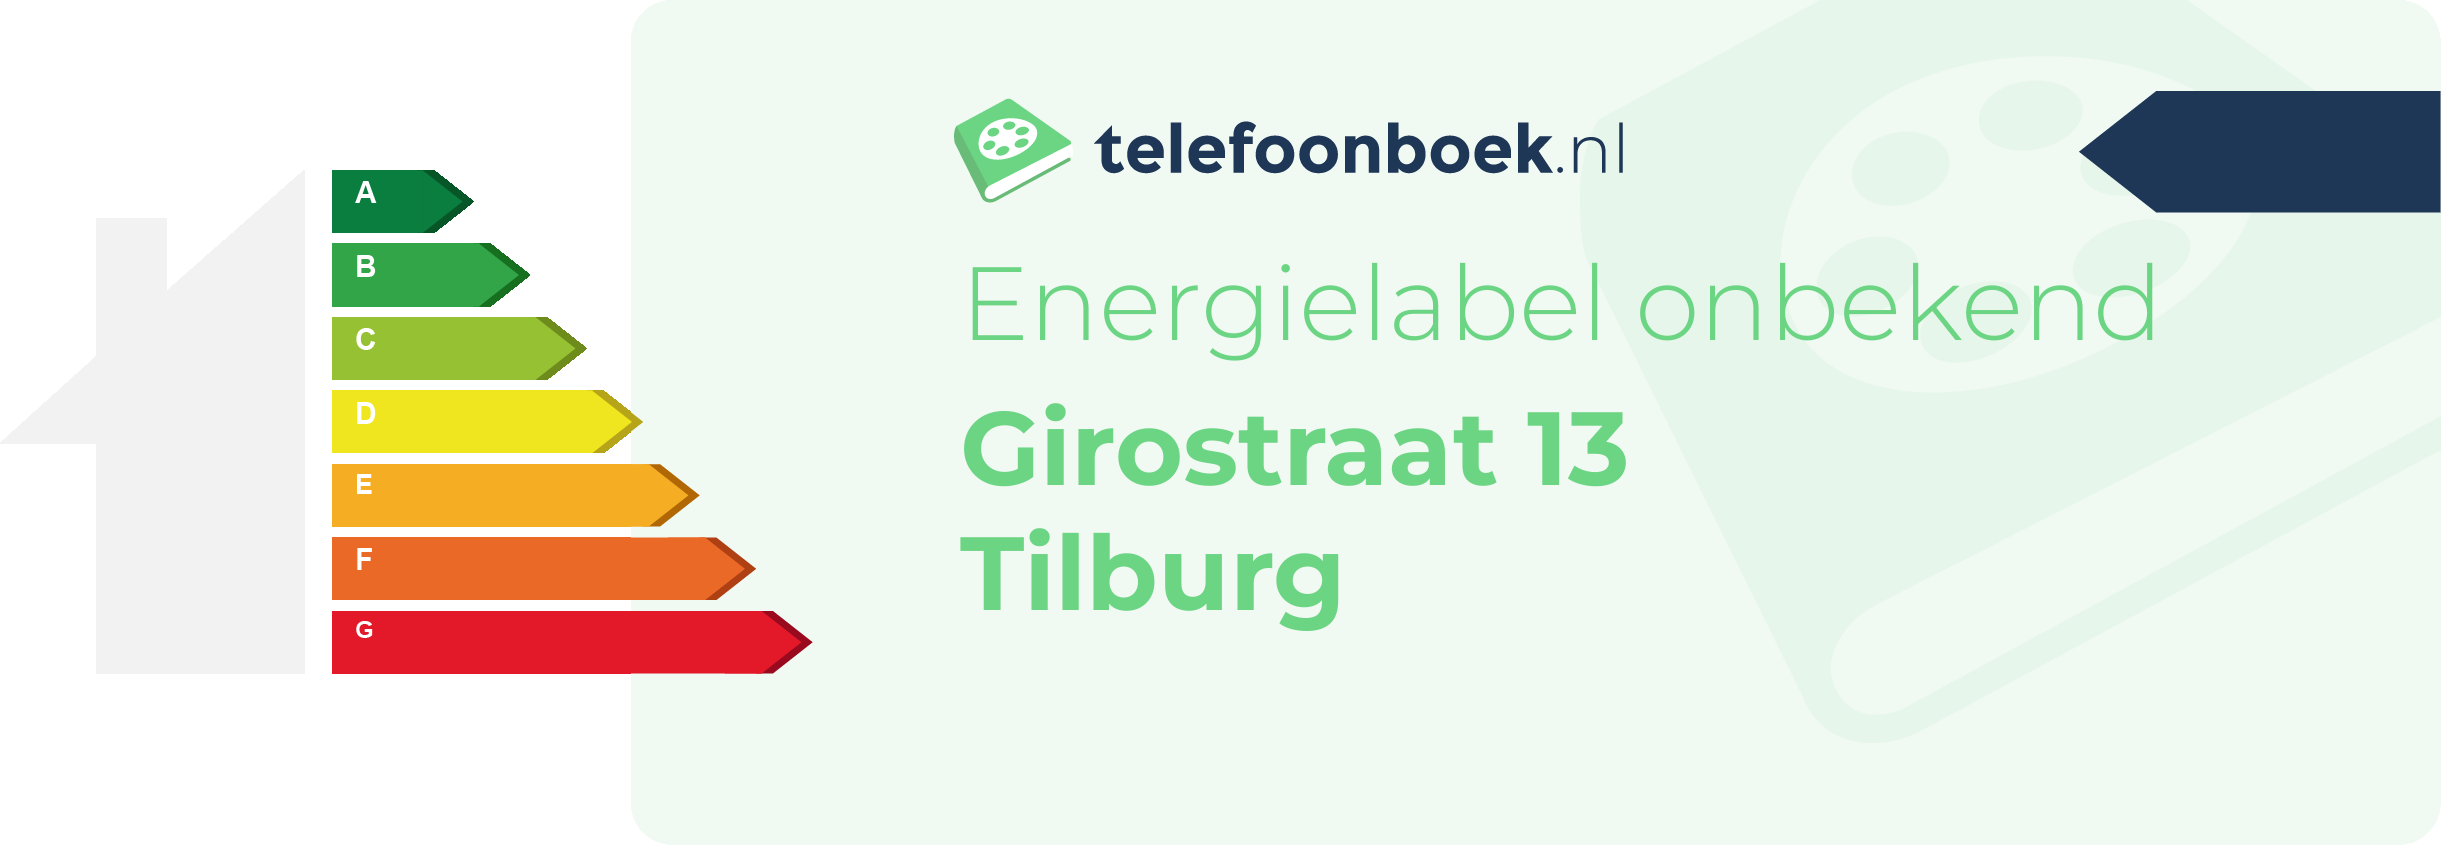 Energielabel Girostraat 13 Tilburg